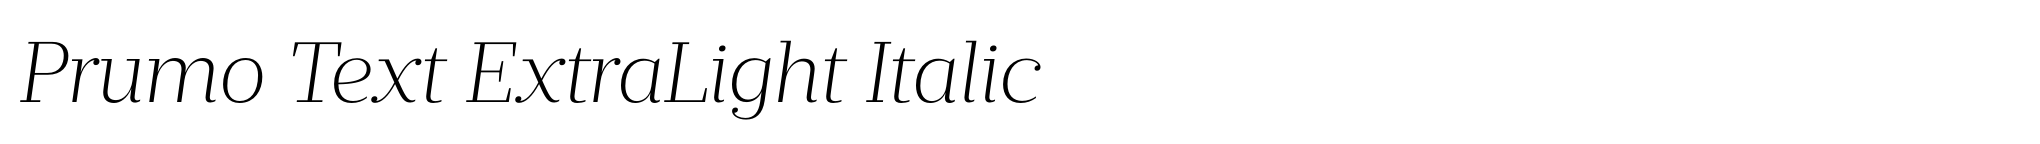 Prumo Text ExtraLight Italic image